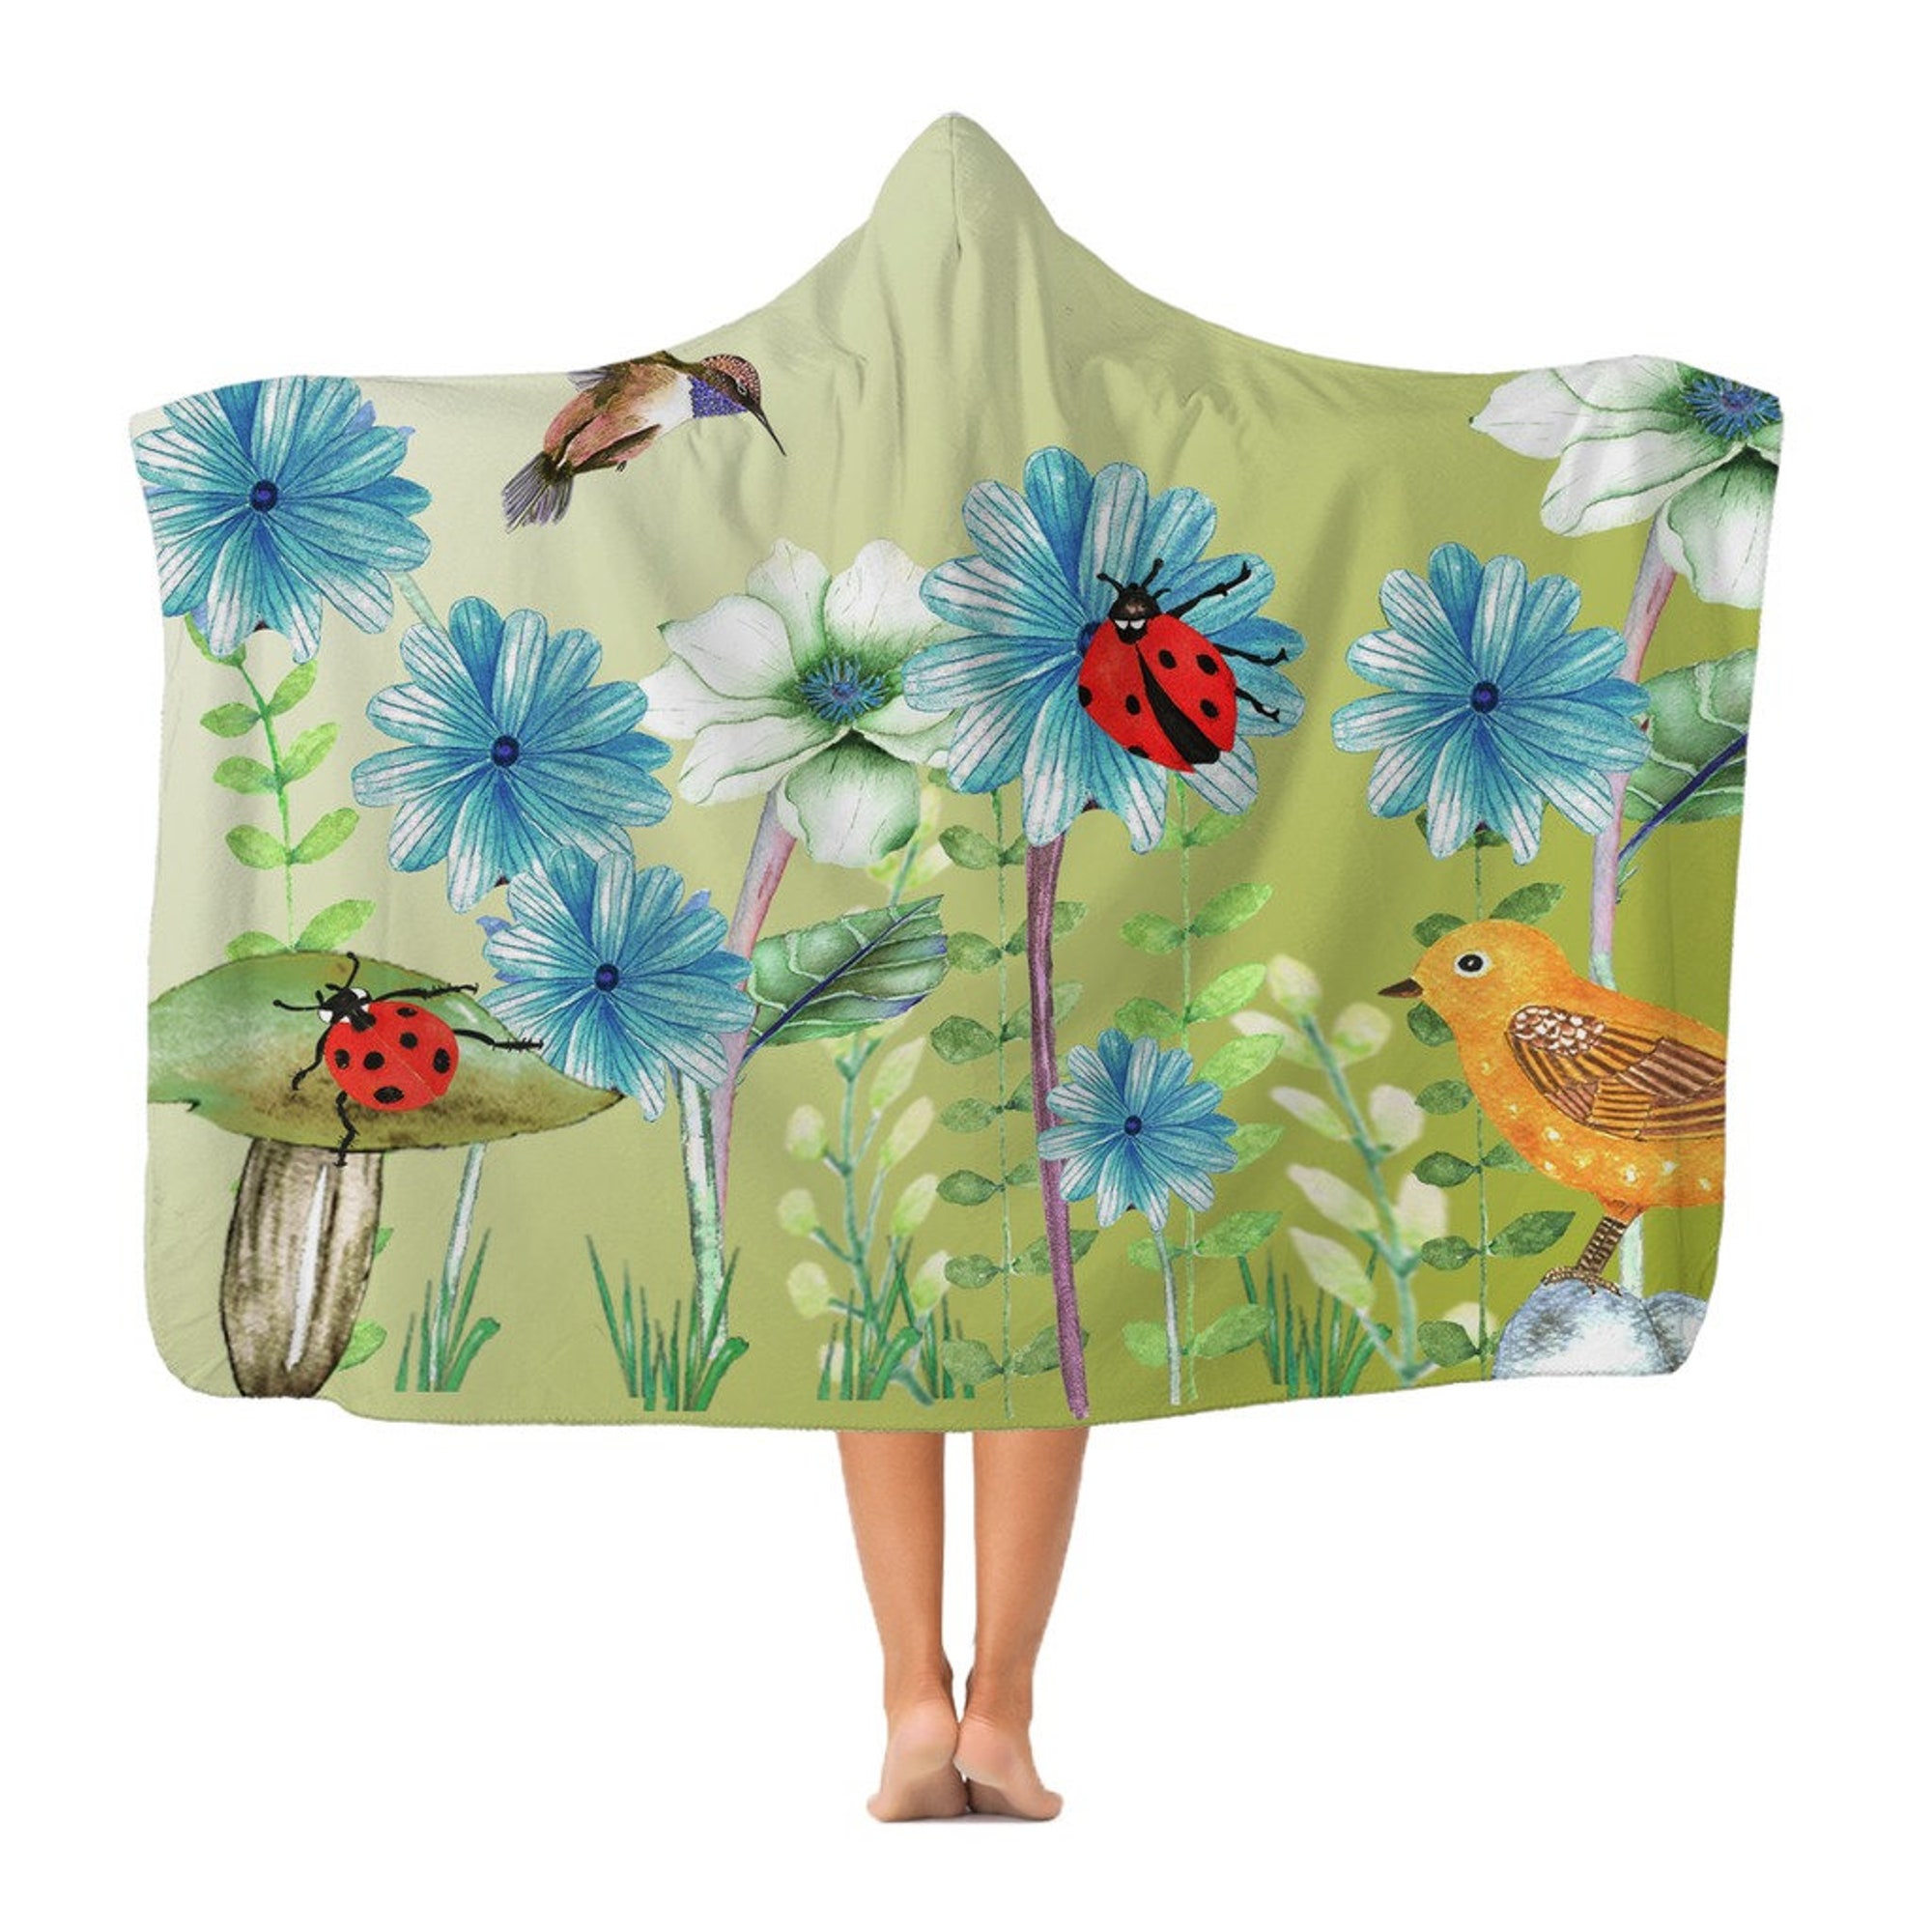 Discover Blue flowers hooded blanket